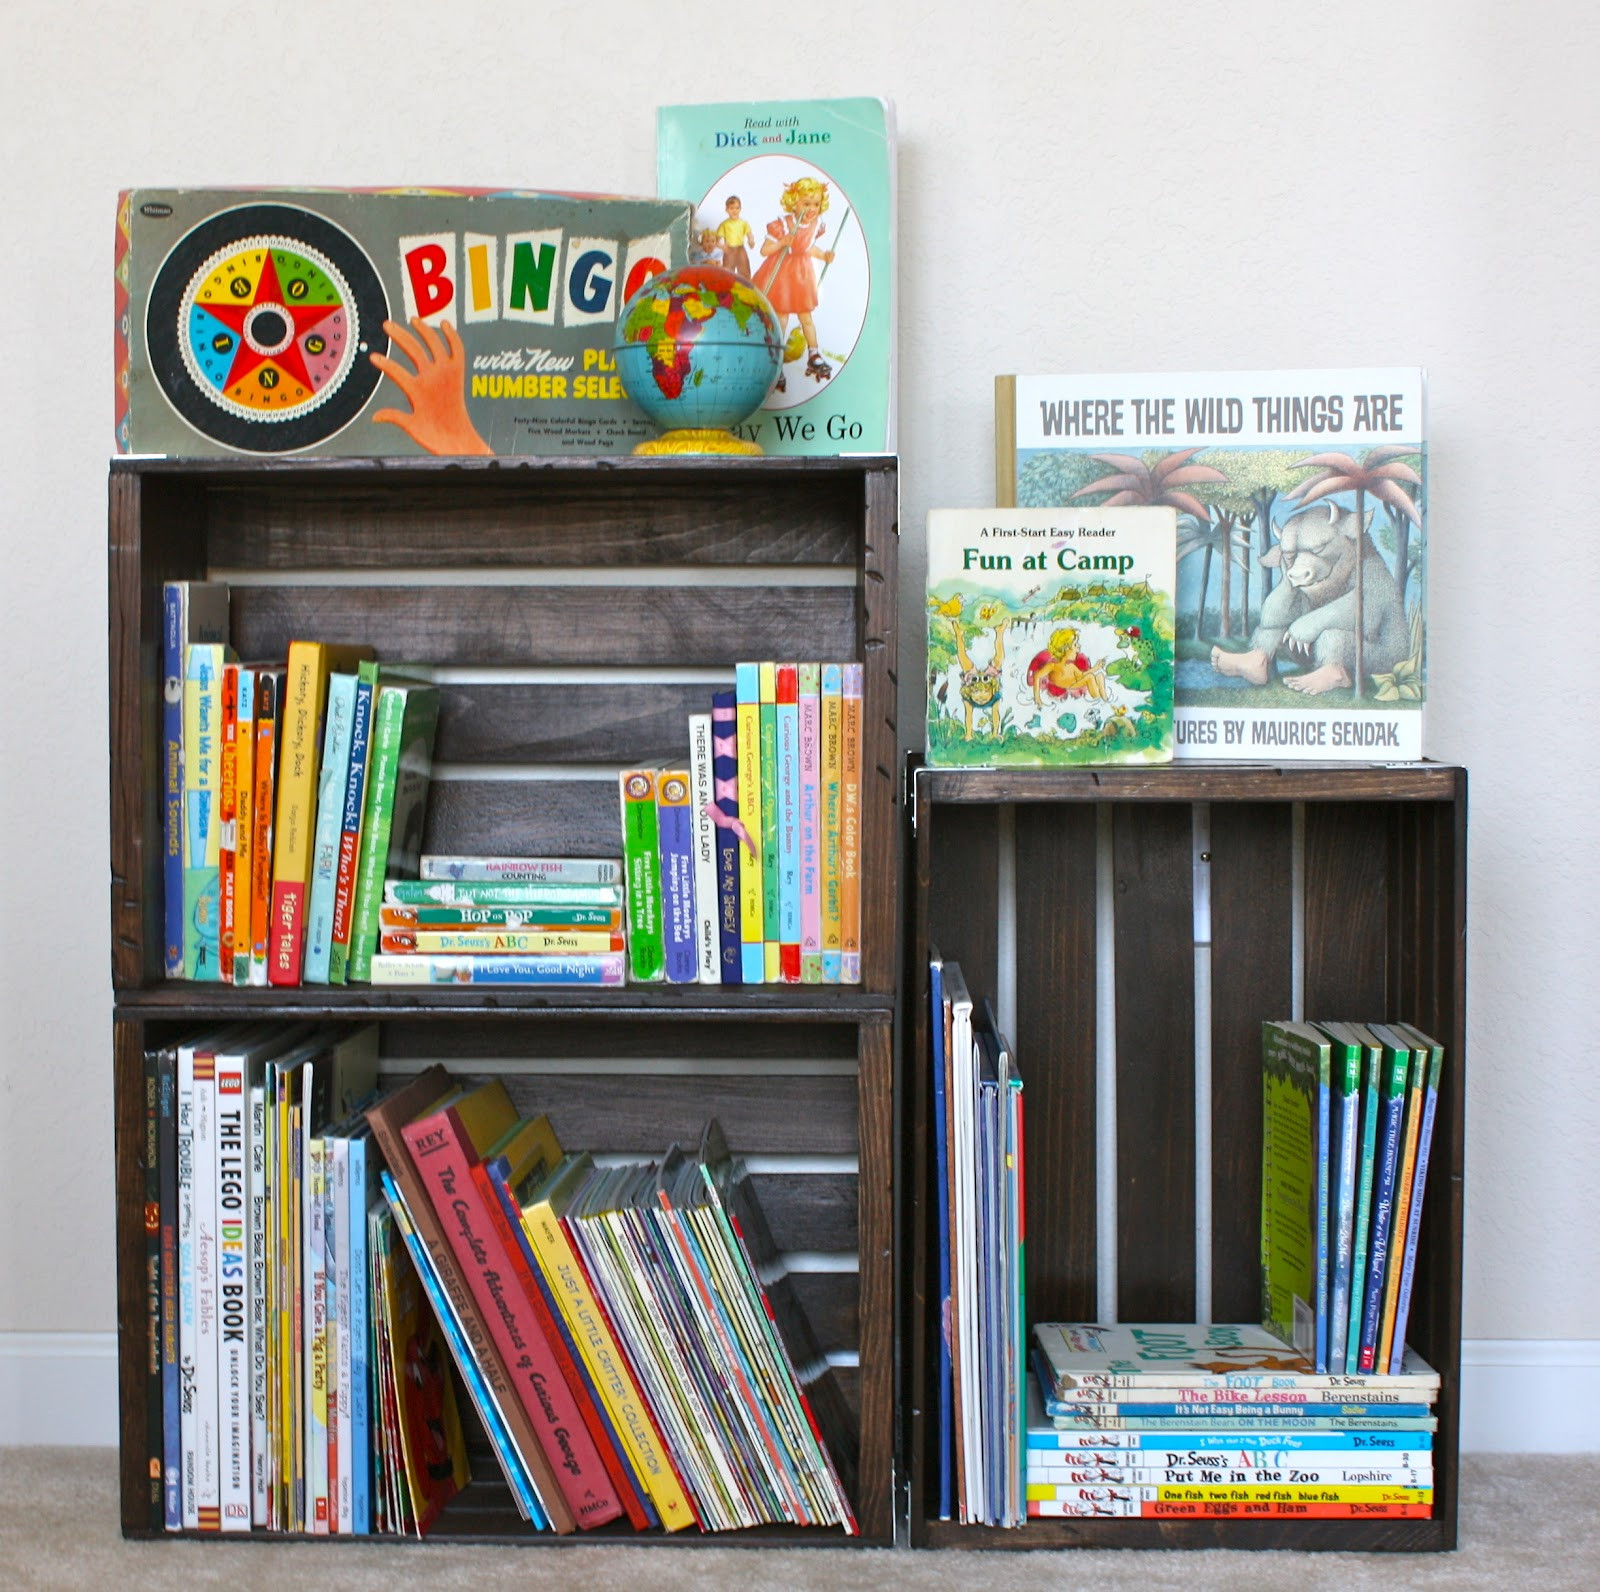 Best ideas about DIY Crate Bookshelf
. Save or Pin christina williams DIY Crate Bookshelf Now.